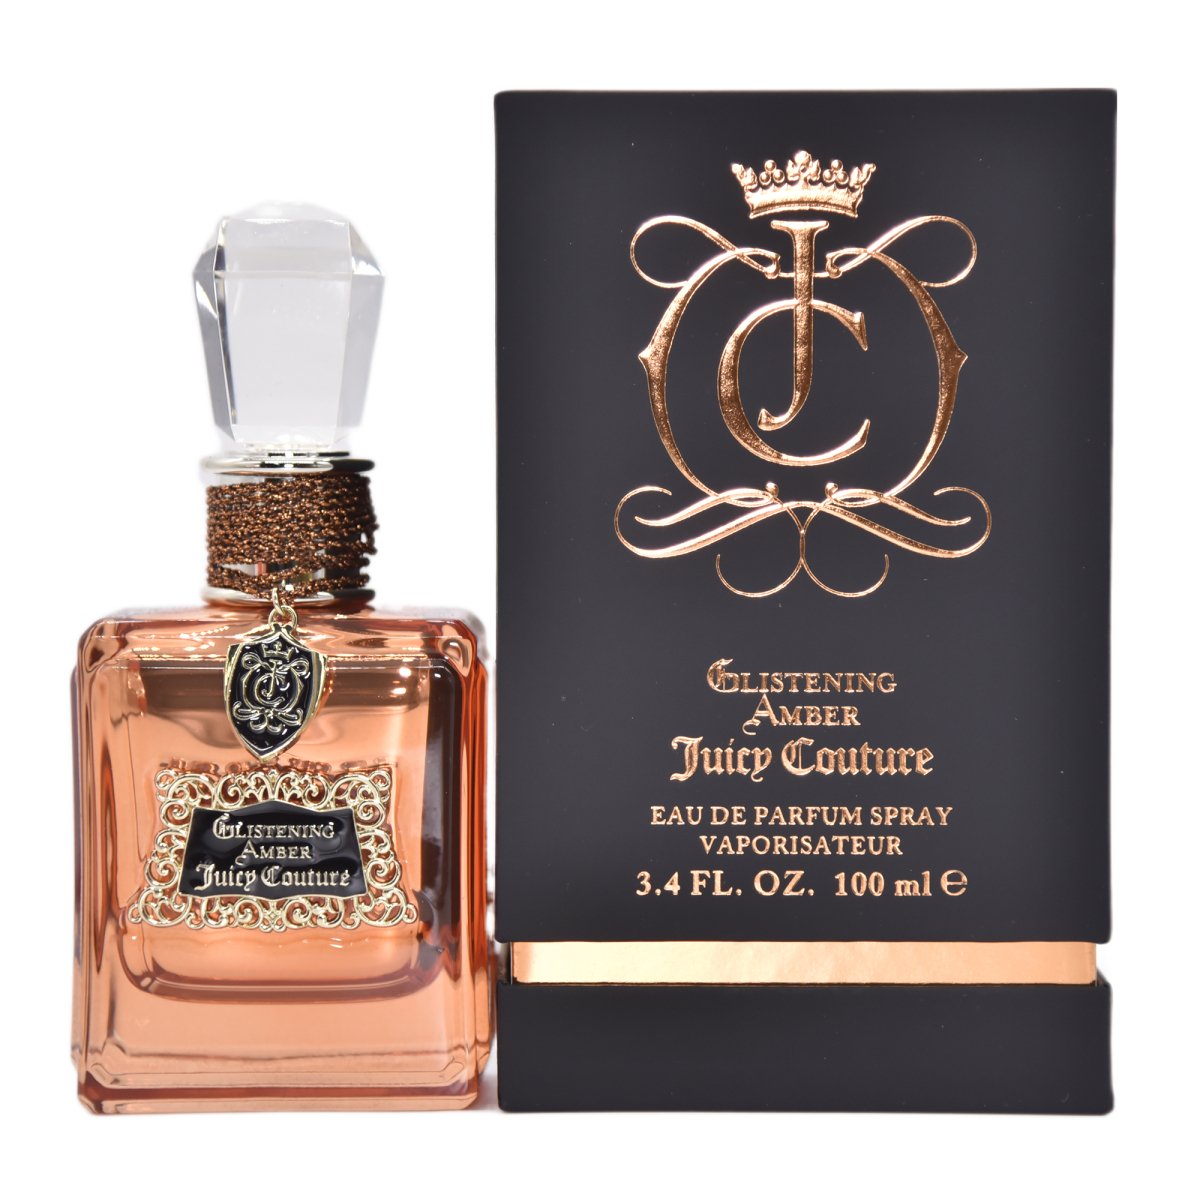 Juicy Couture Ladies Glistening Amber EDP Spray - Perfume Headquarters - Juicy Couture - 3.4 oz - Eau de Parfum - Fragrance - 719346645447 - Fragrance